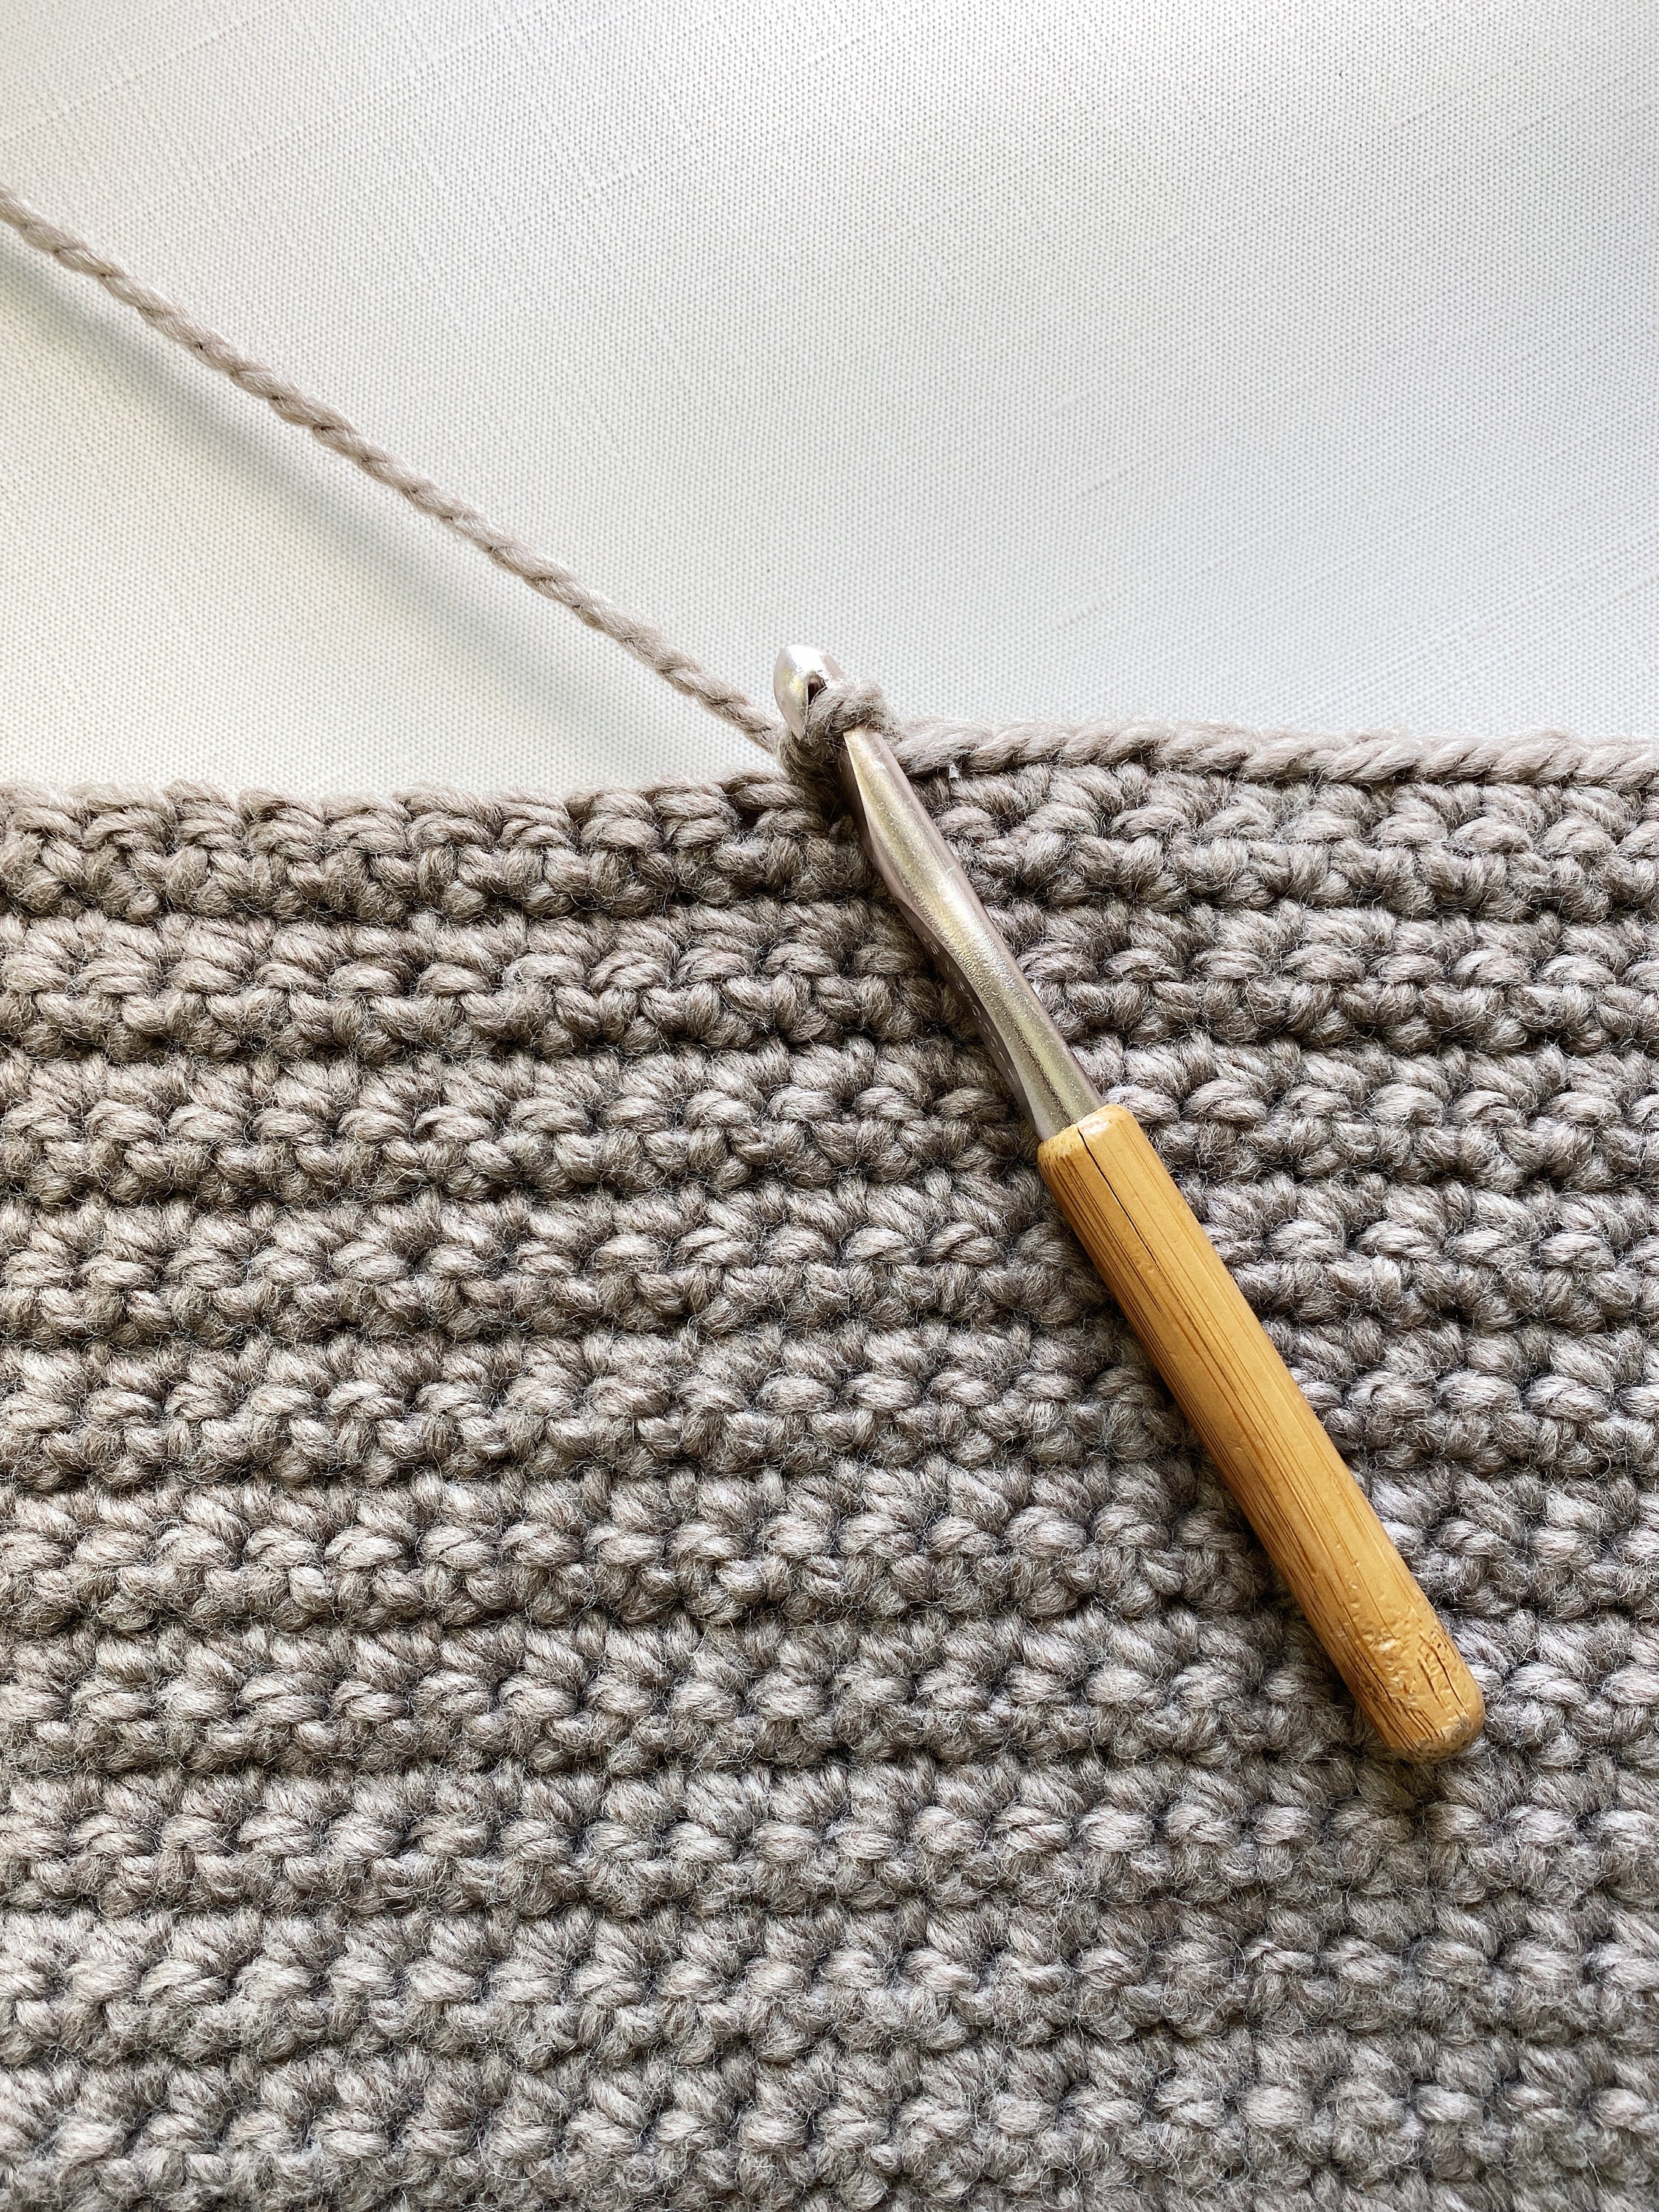 DIY Crochet Bag Pattern Muse Hemp Ethnic Net Bag Hobo 